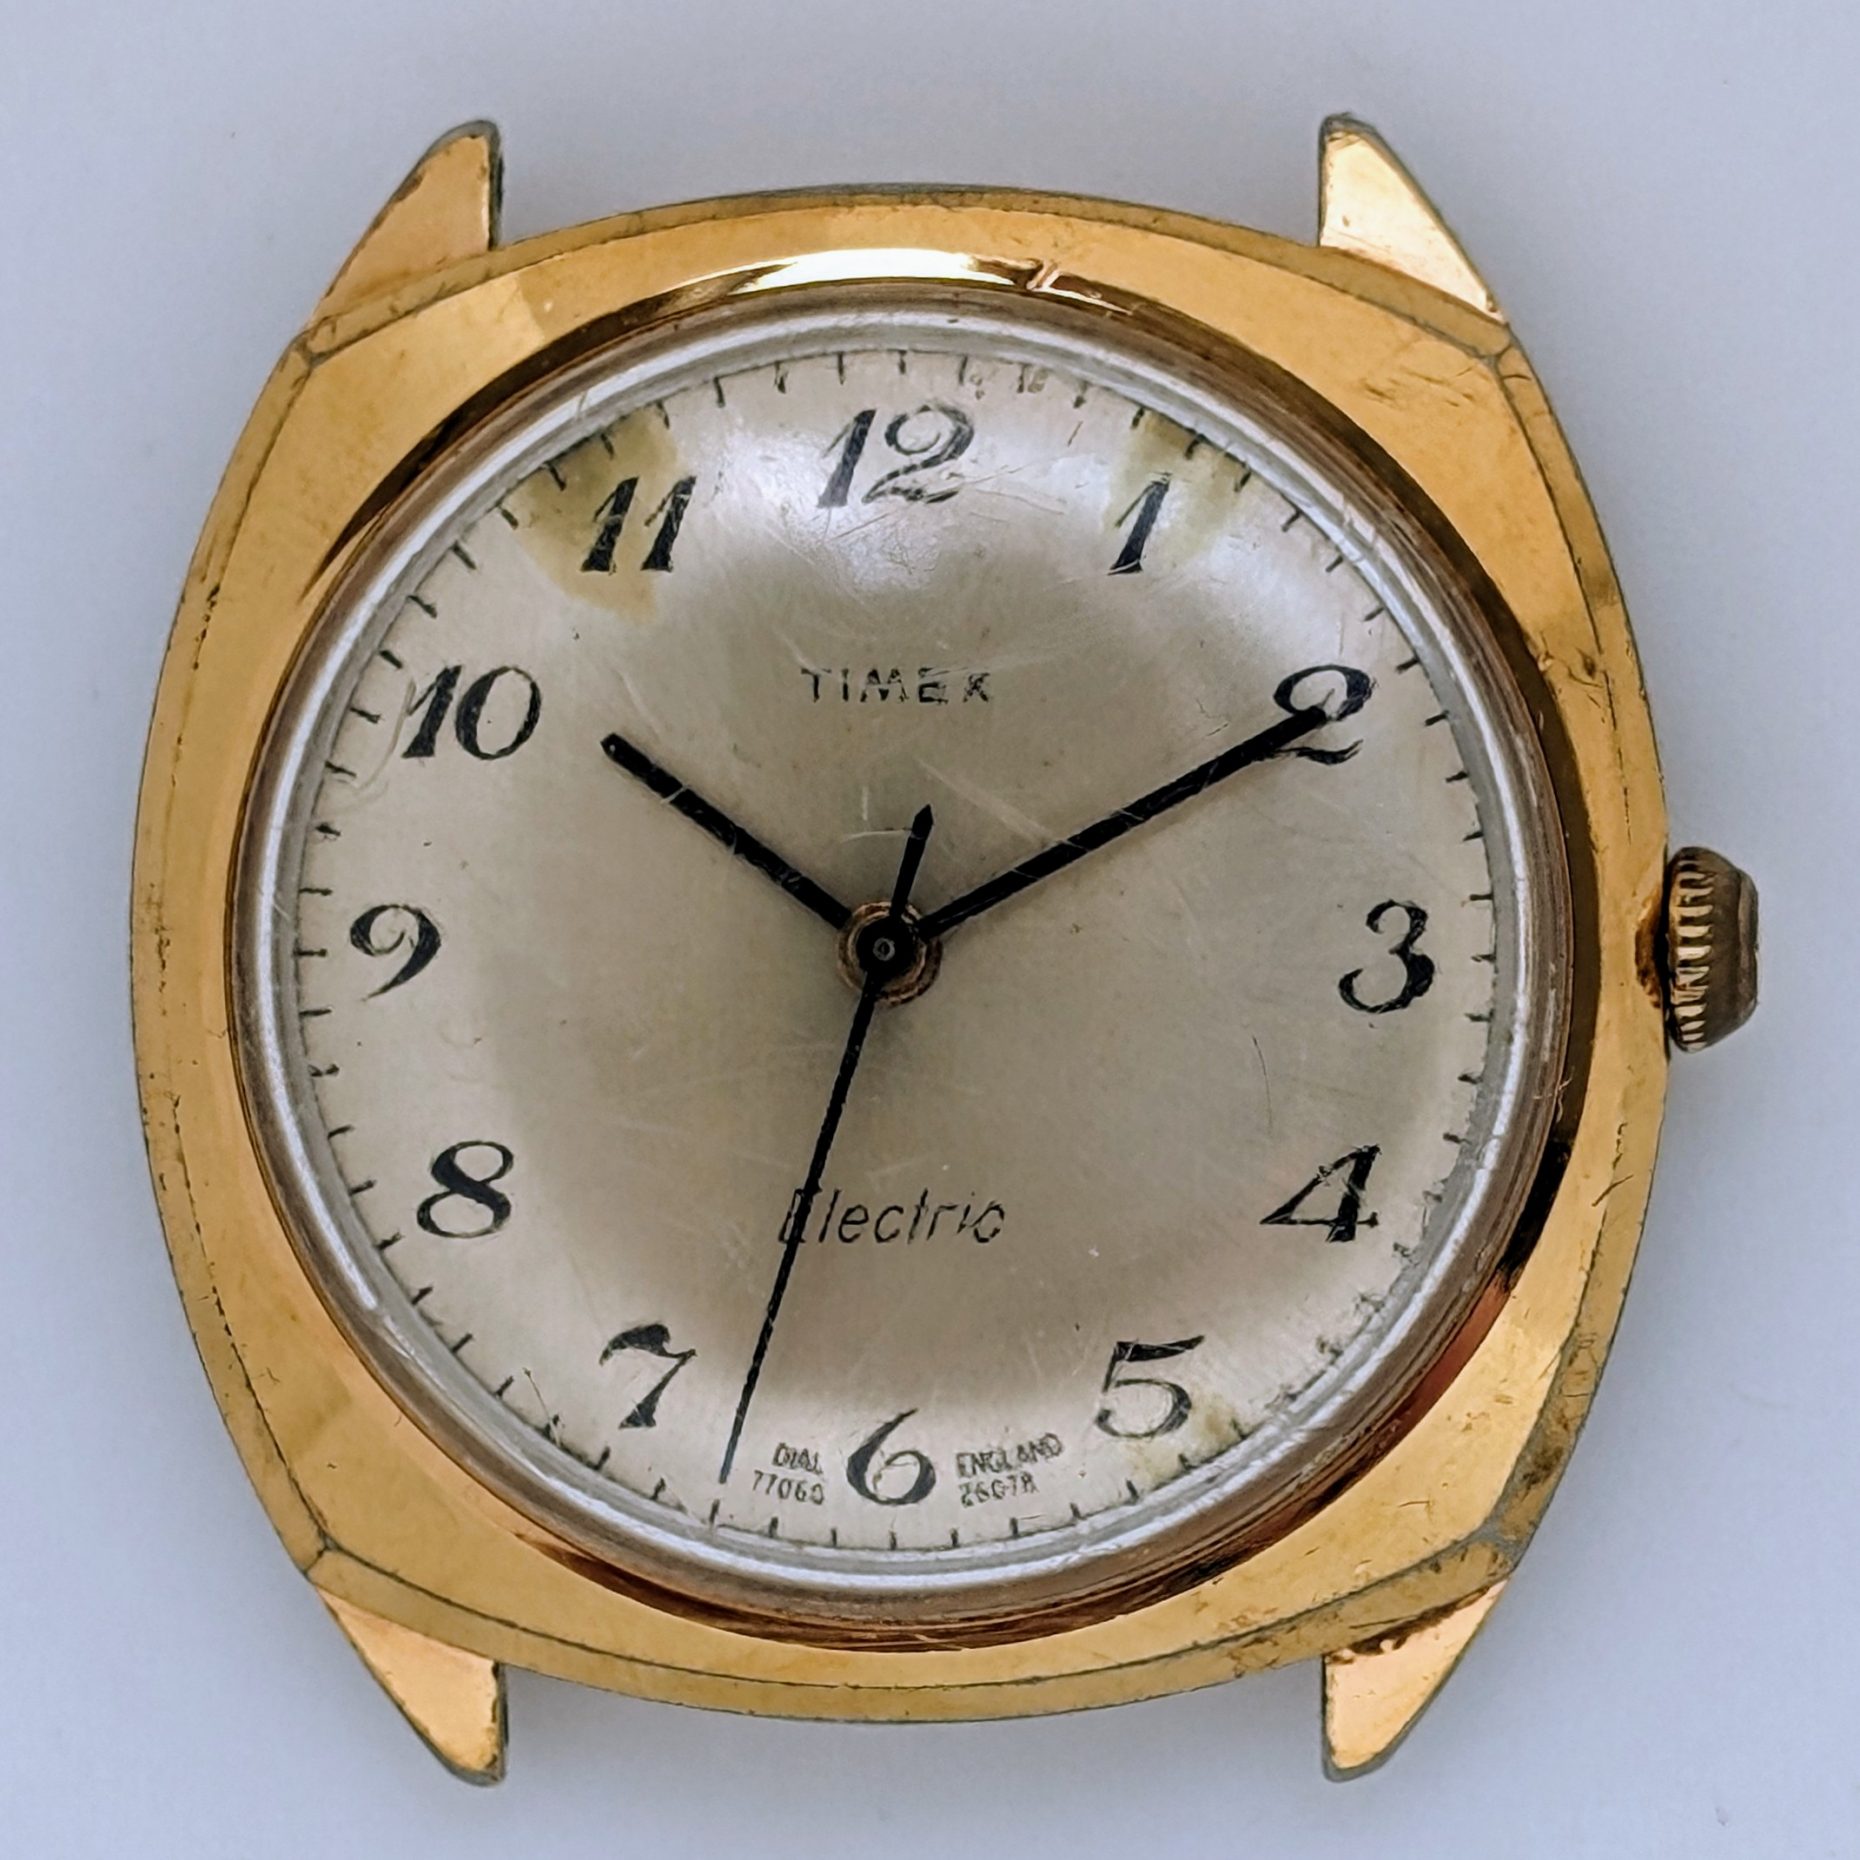 Timex Electric 77060 26078 1978 watch